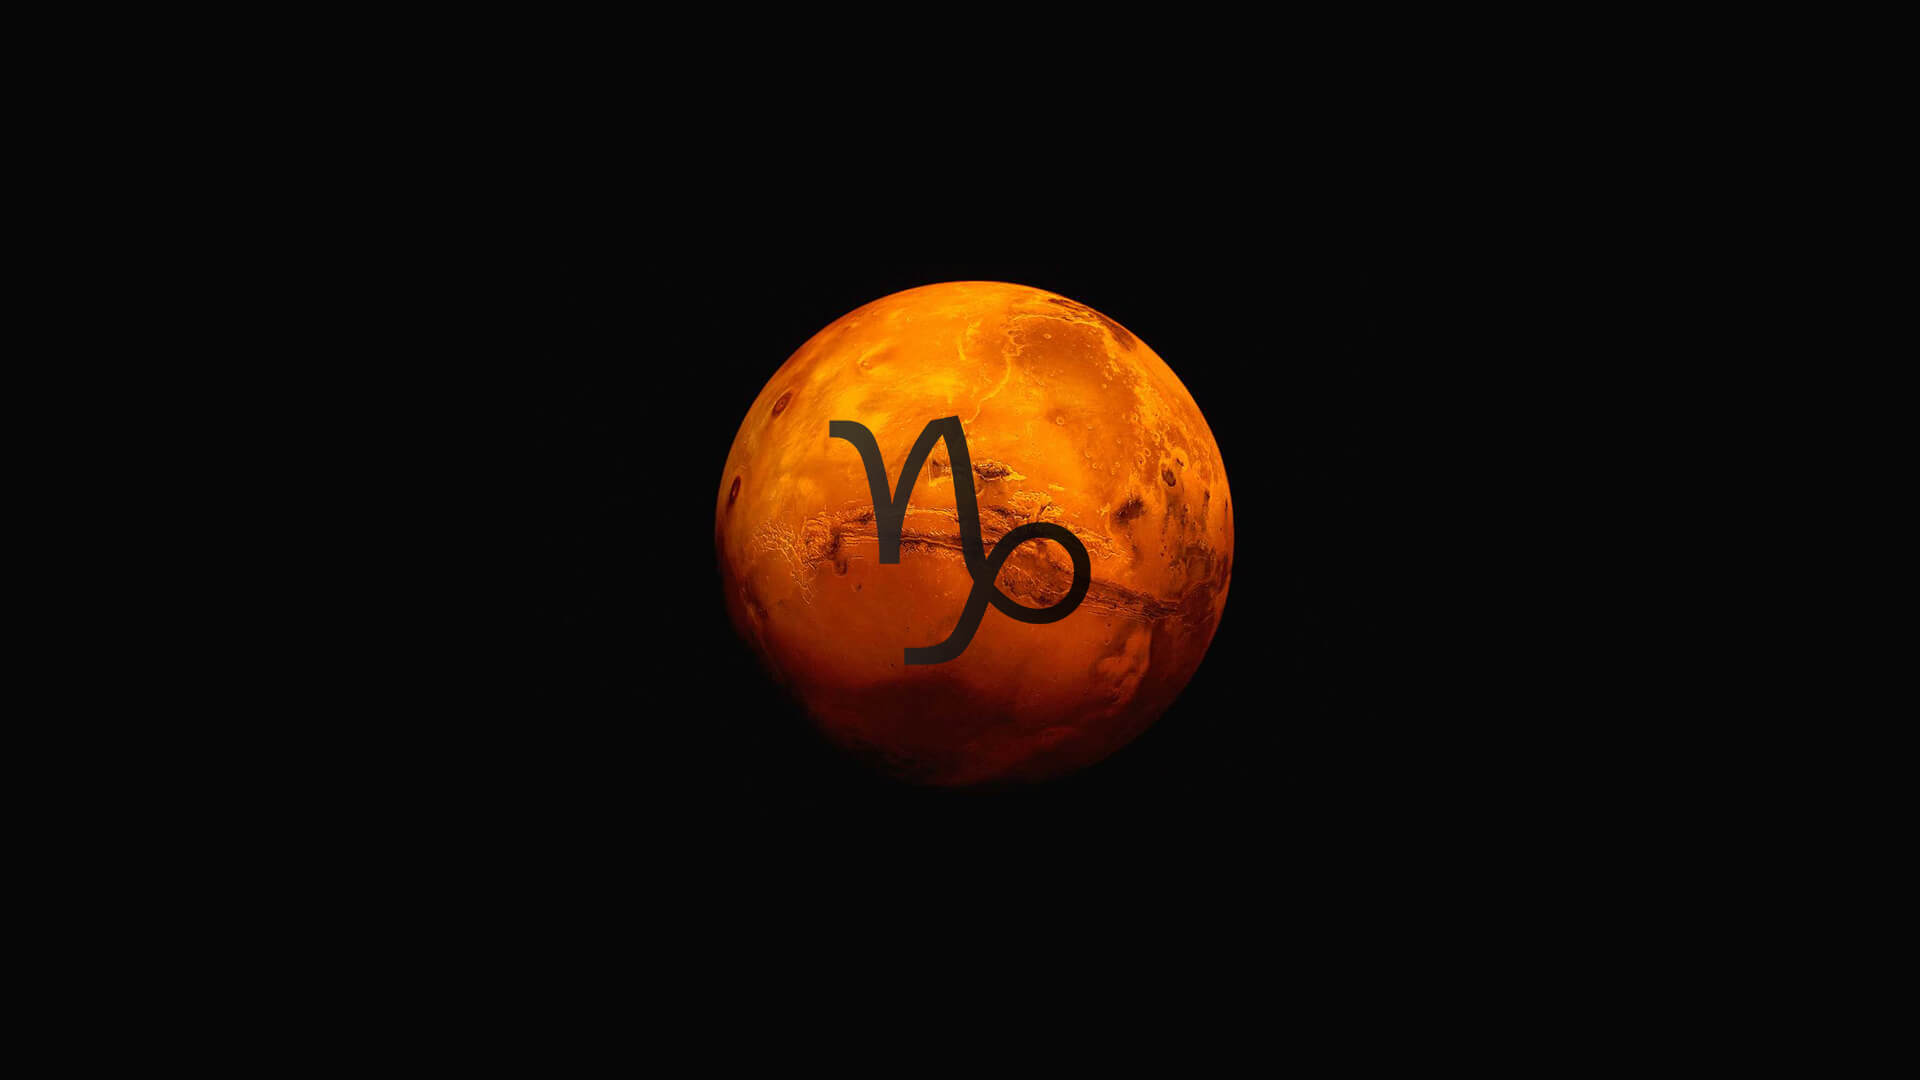 Mars enters Capricorn